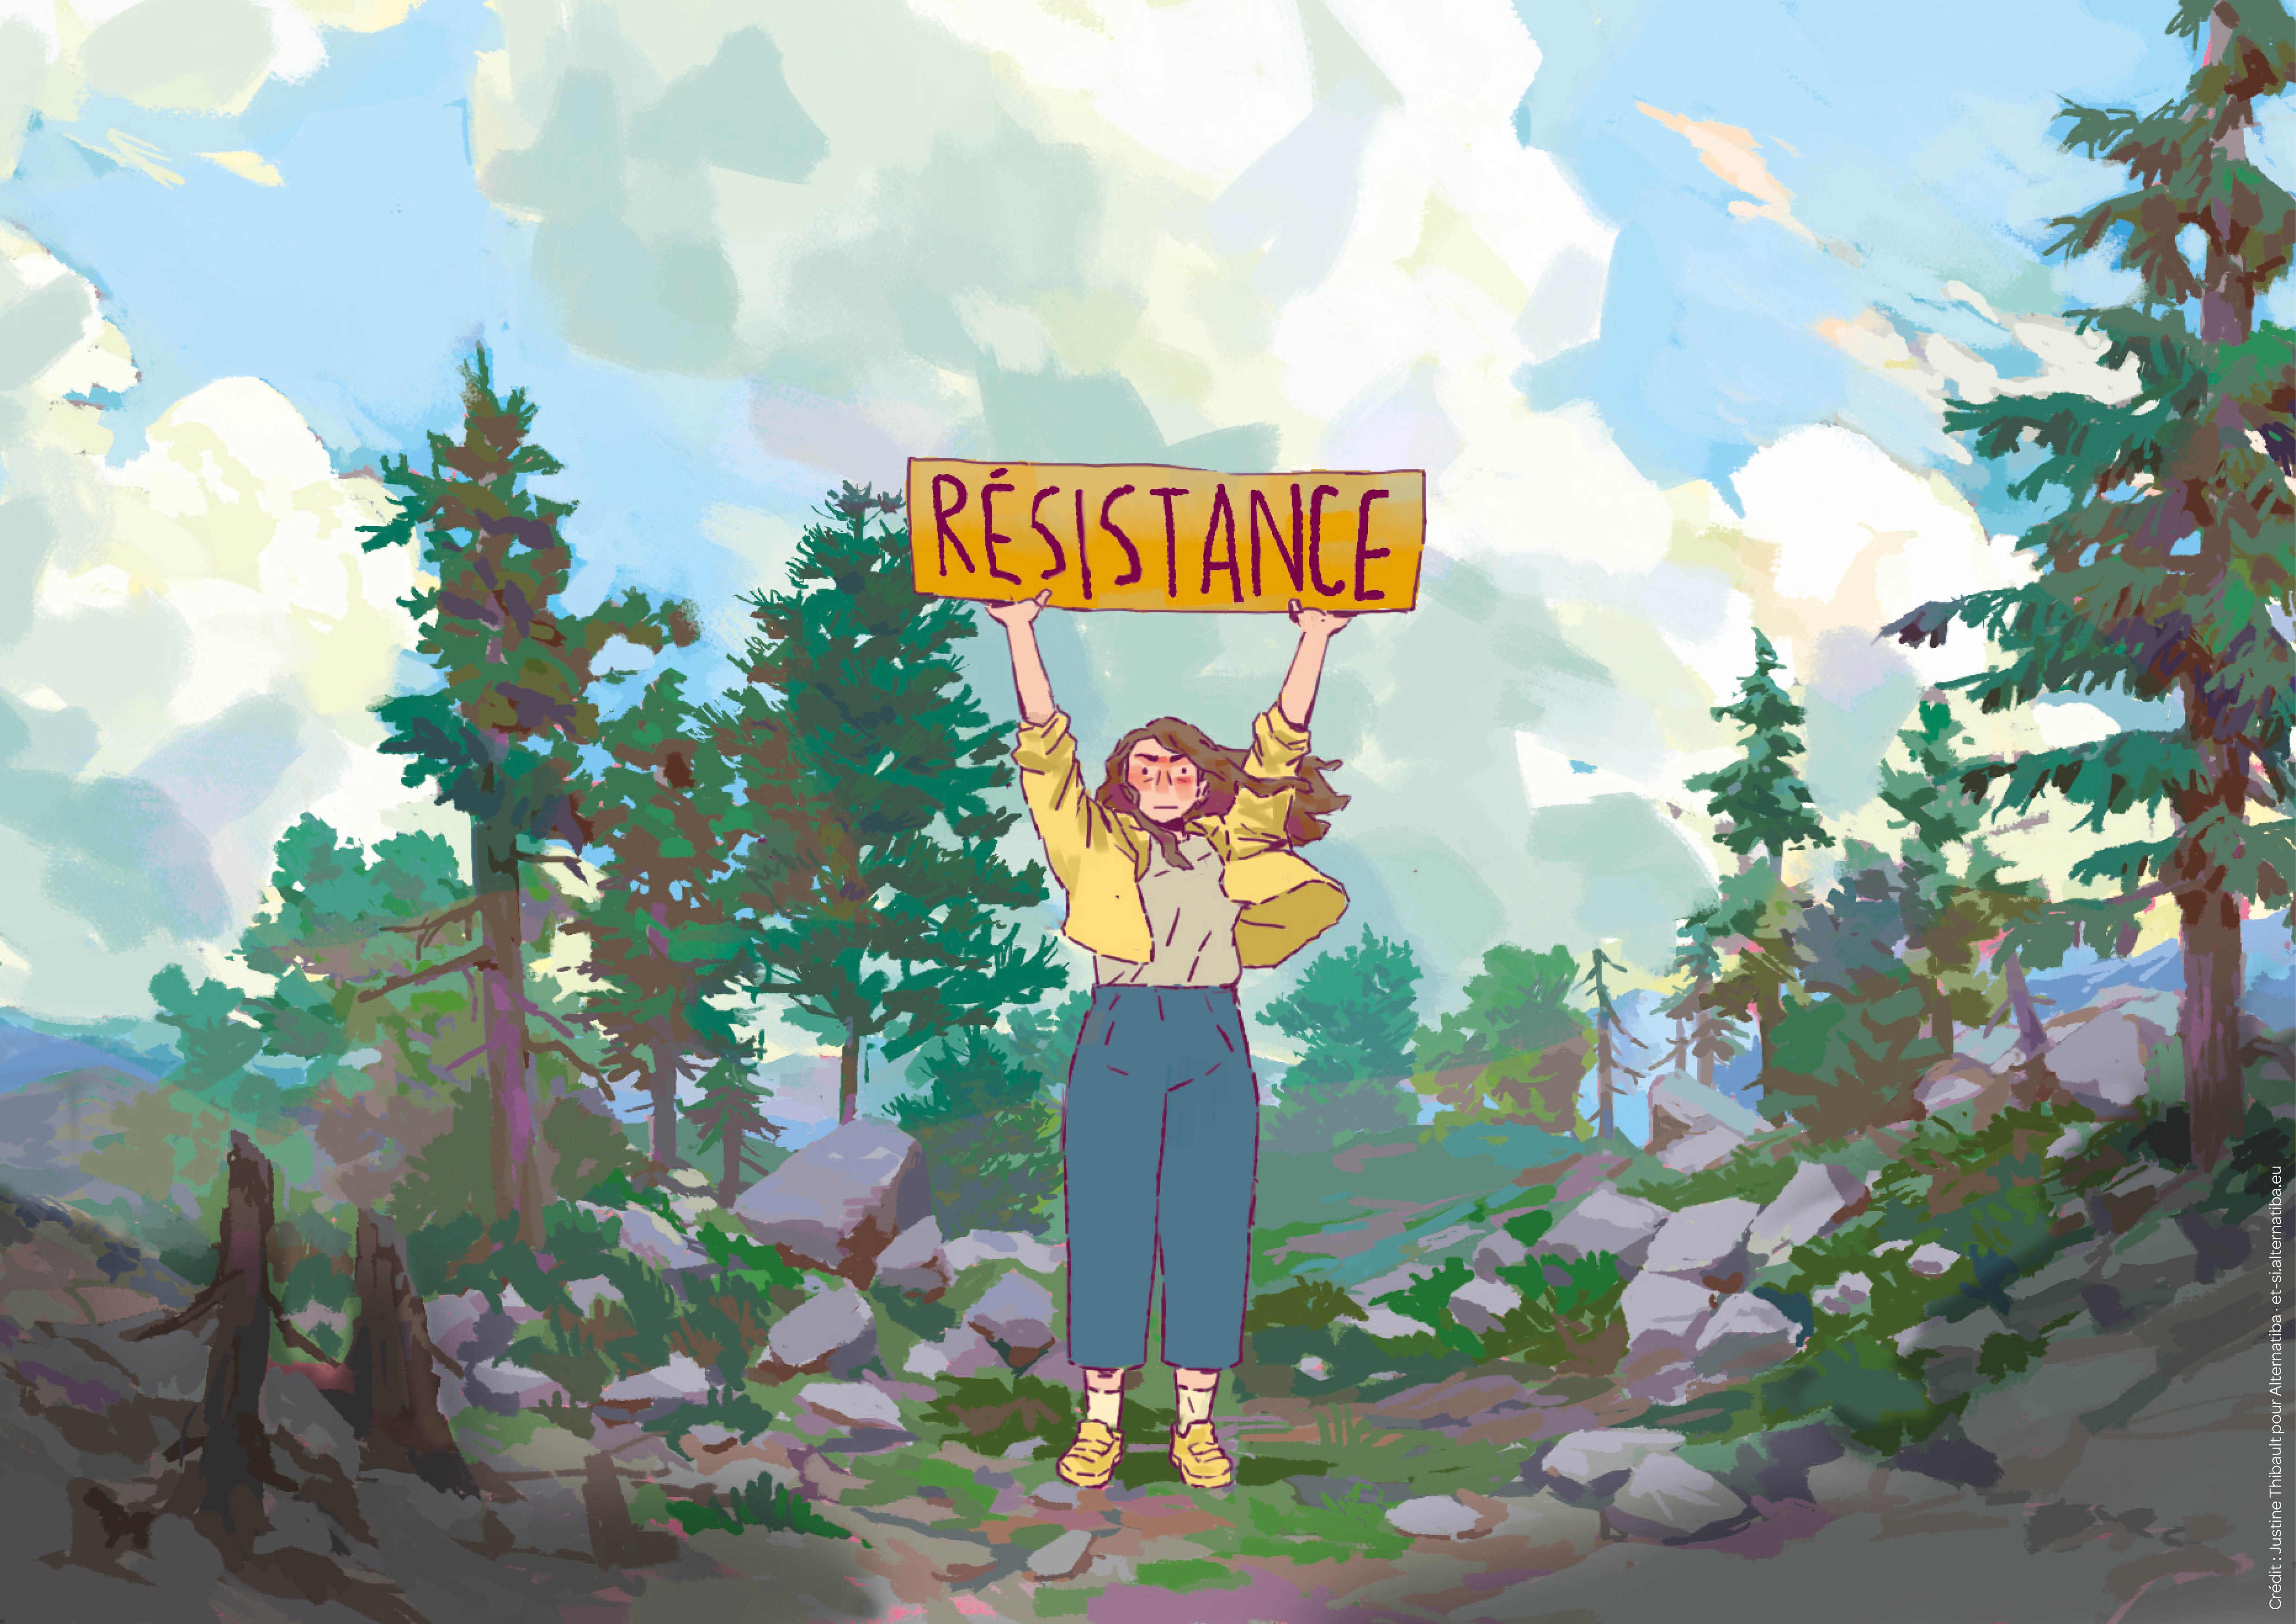 Résistance - illustration par Justine Thibault pour Alternatiba, et-si.alternatiba.eu